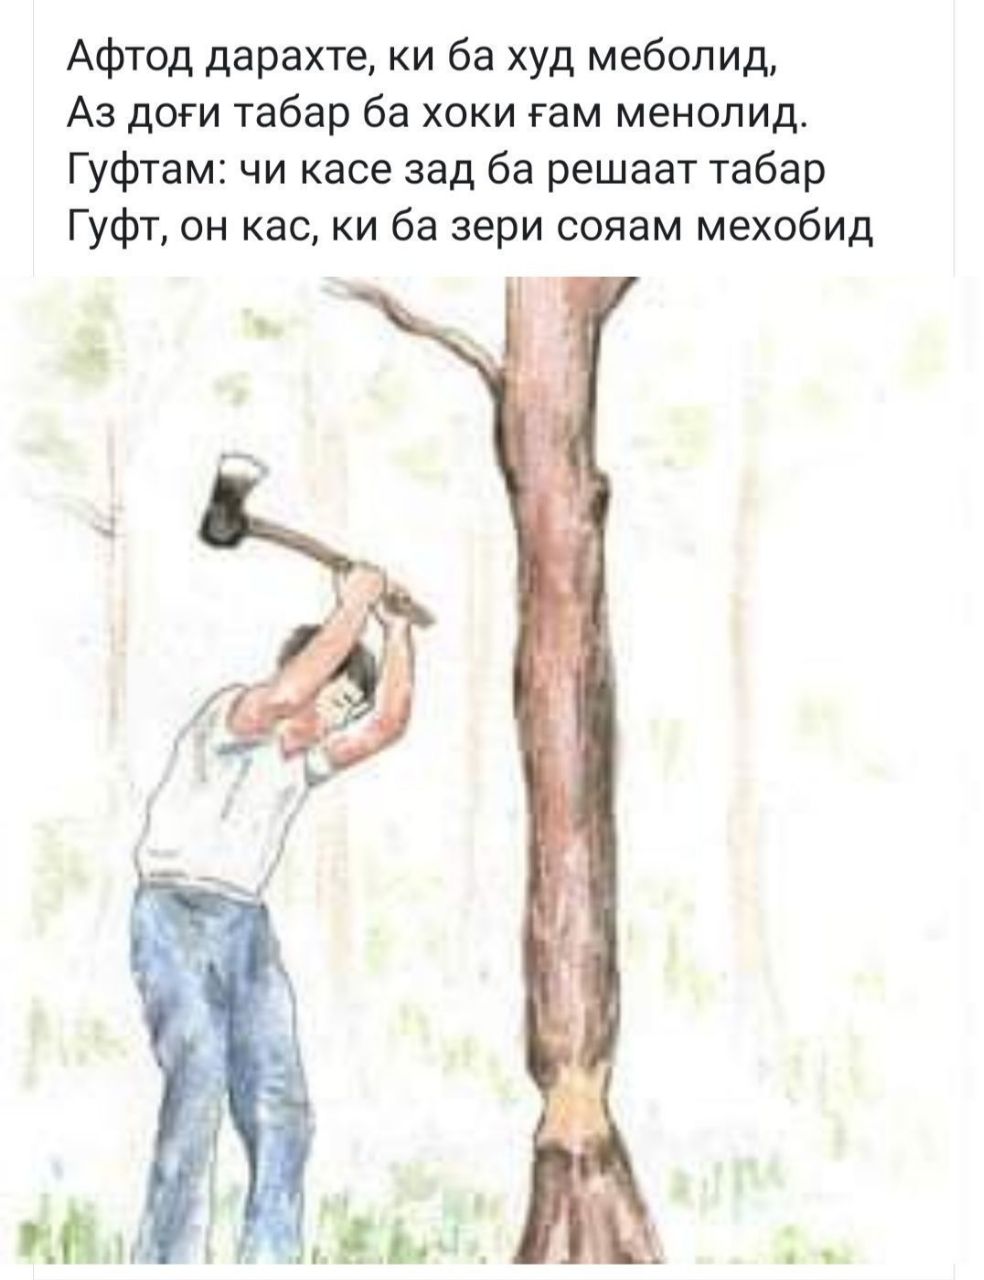 Человек рубит дерево топором